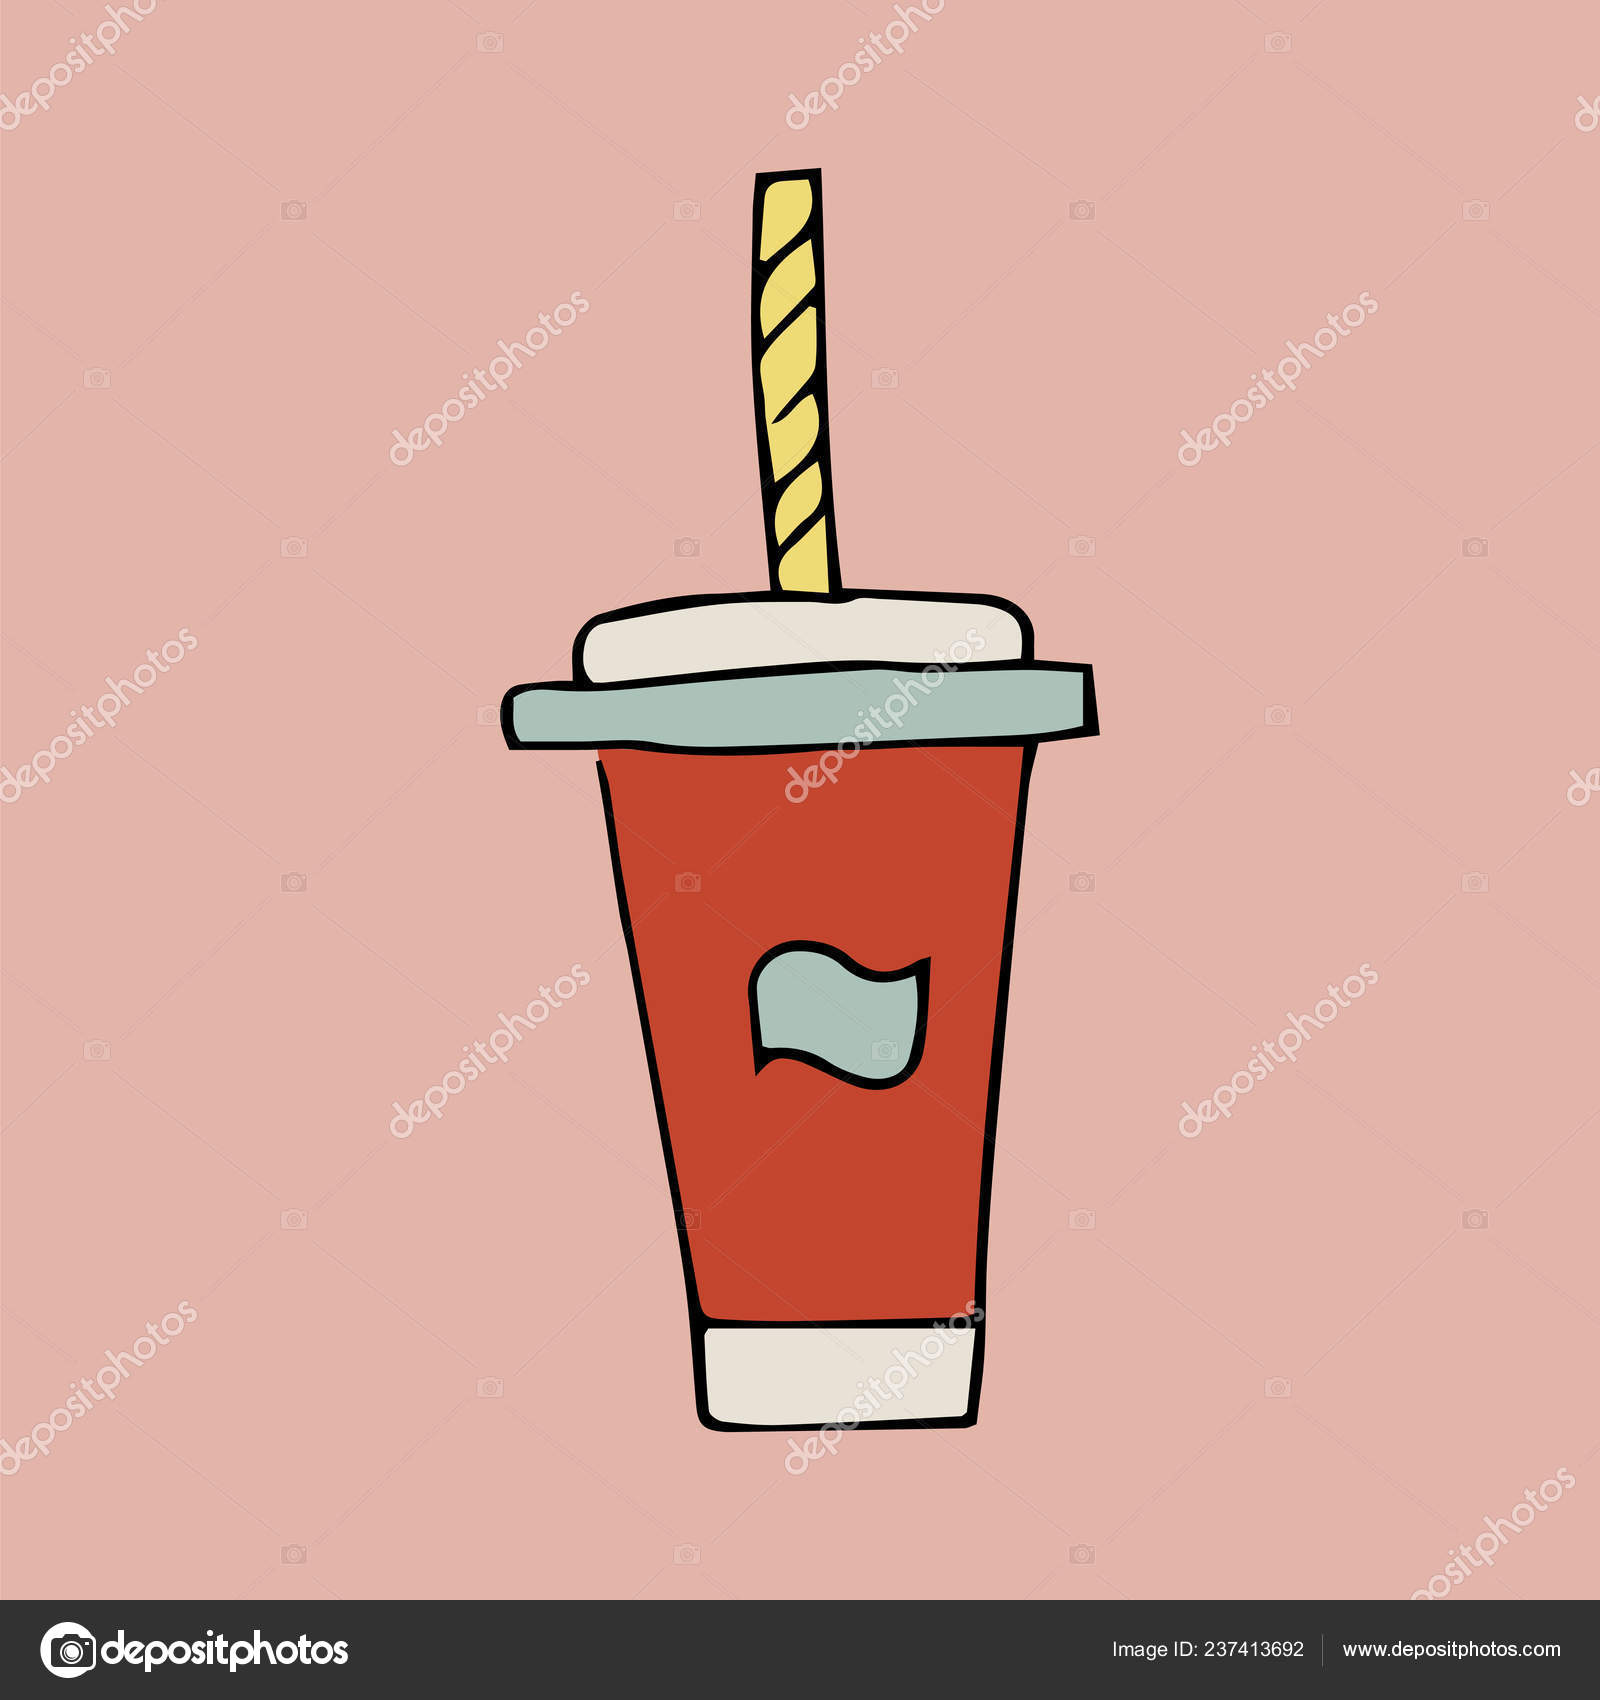 https://st4.depositphotos.com/21916792/23741/v/1600/depositphotos_237413692-stock-illustration-fast-food-glass-soda-water.jpg